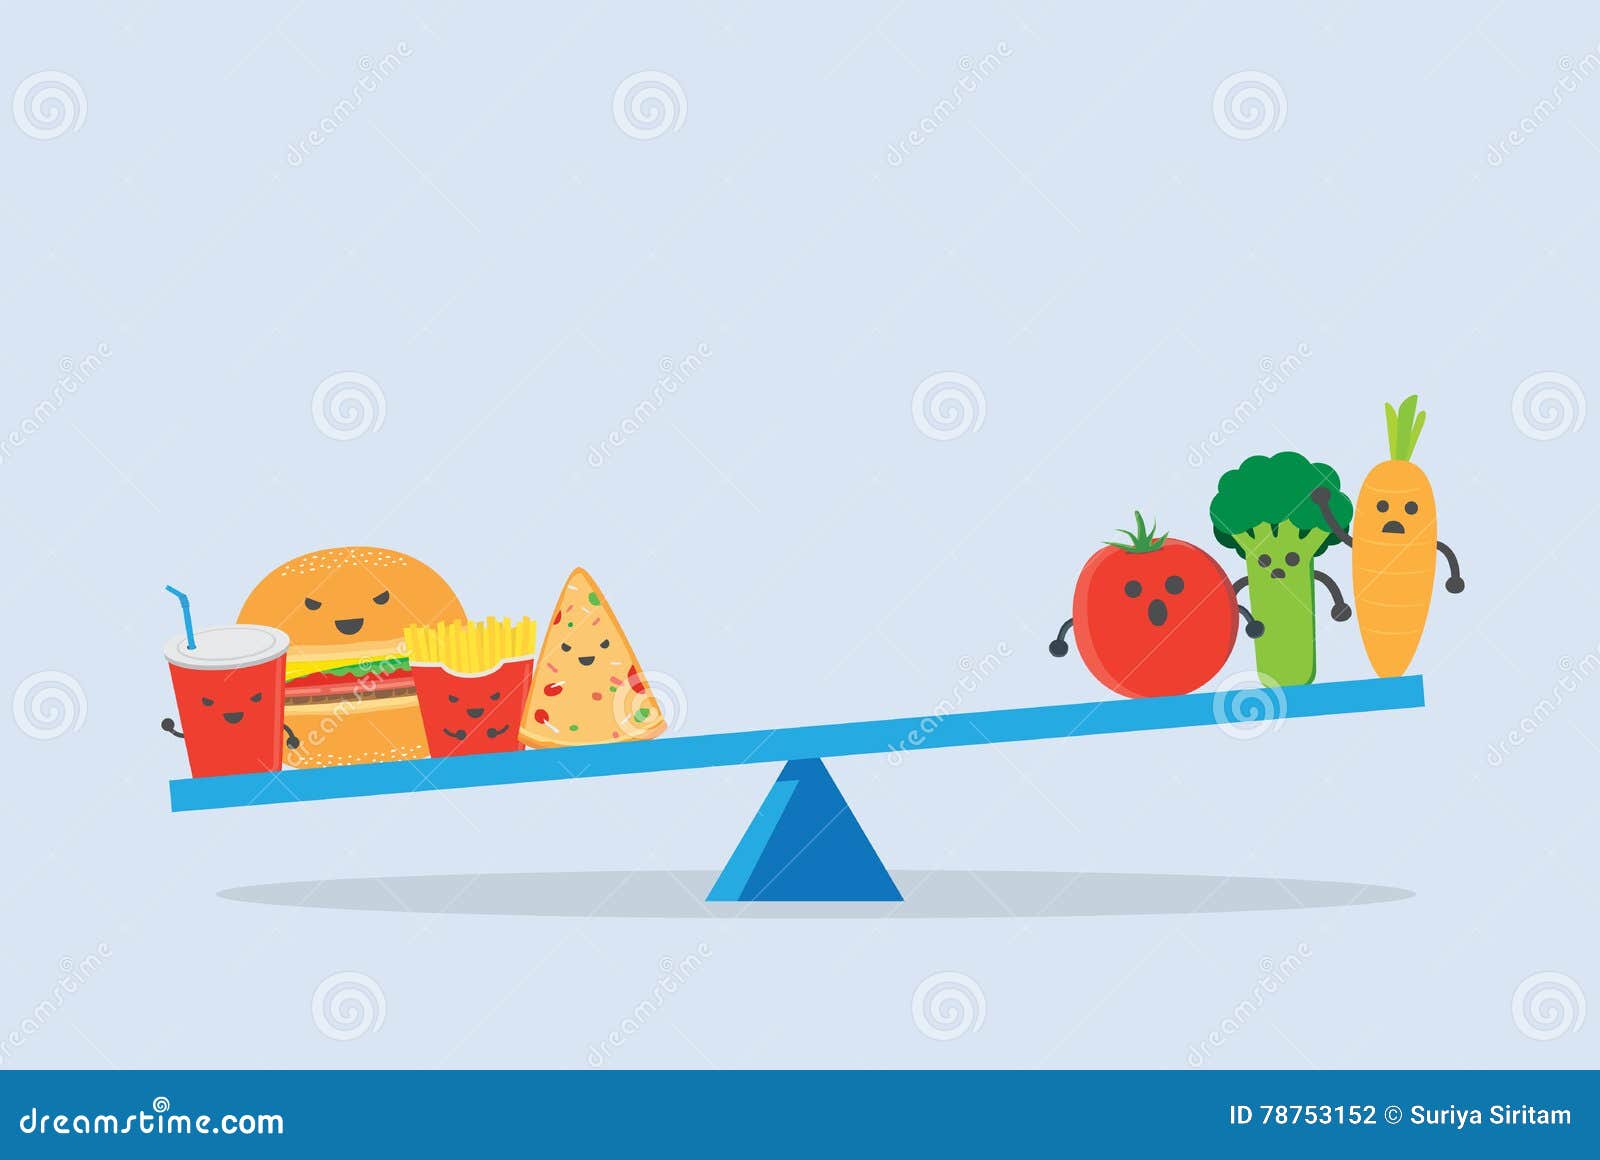 https://thumbs.dreamstime.com/z/junk-food-heavier-than-vegetable-balance-scales-concept-illustration-calories-78753152.jpg